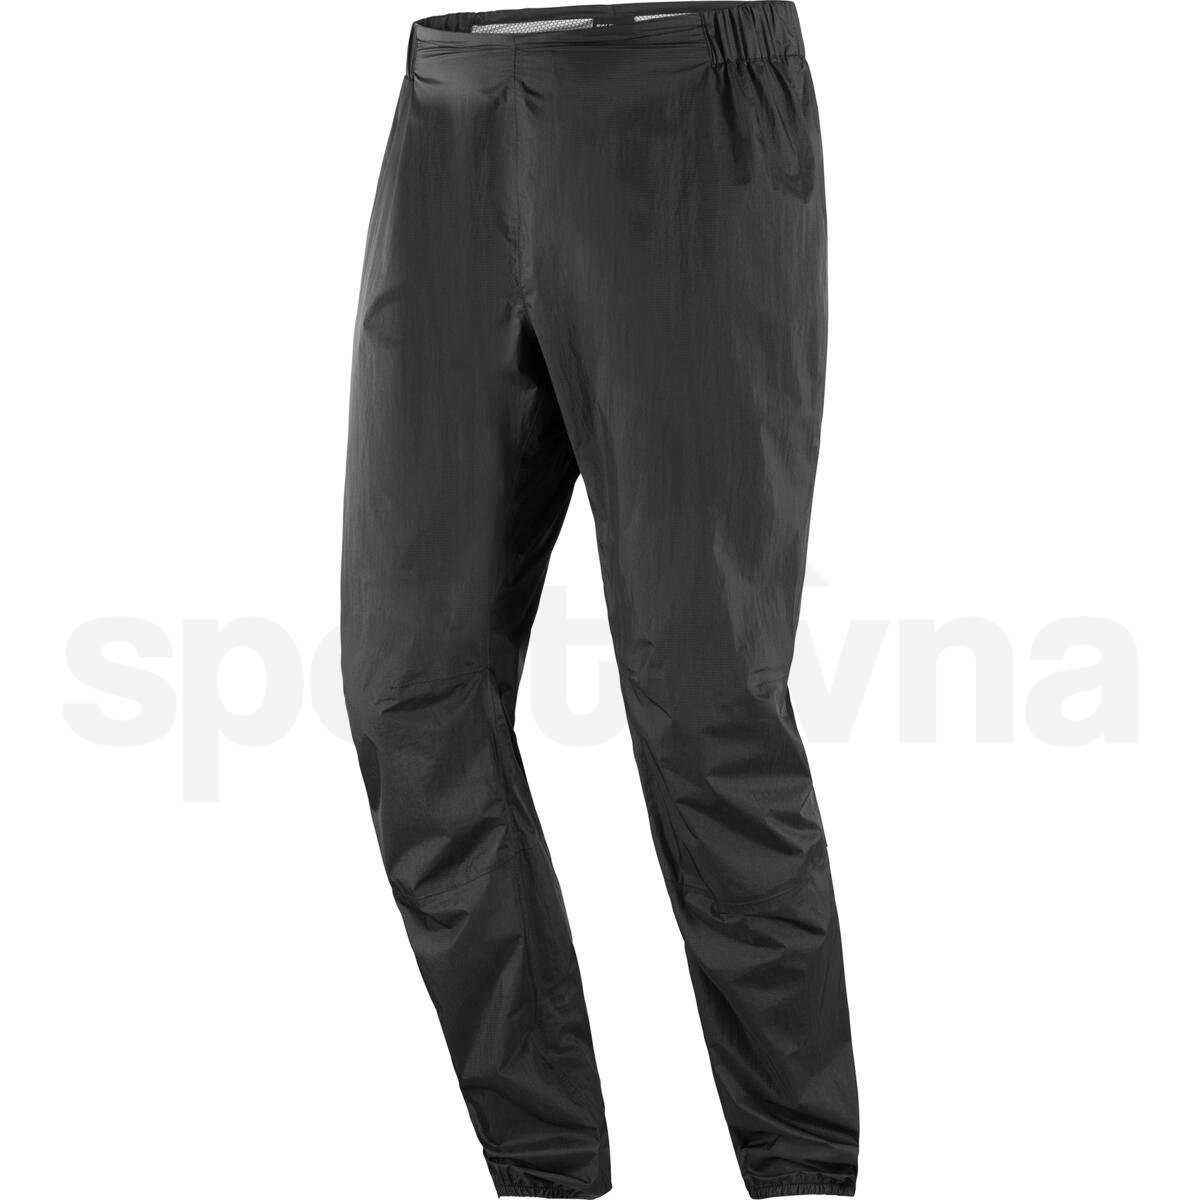 Kalhoty Salomon Bonatti WP Pant - černá